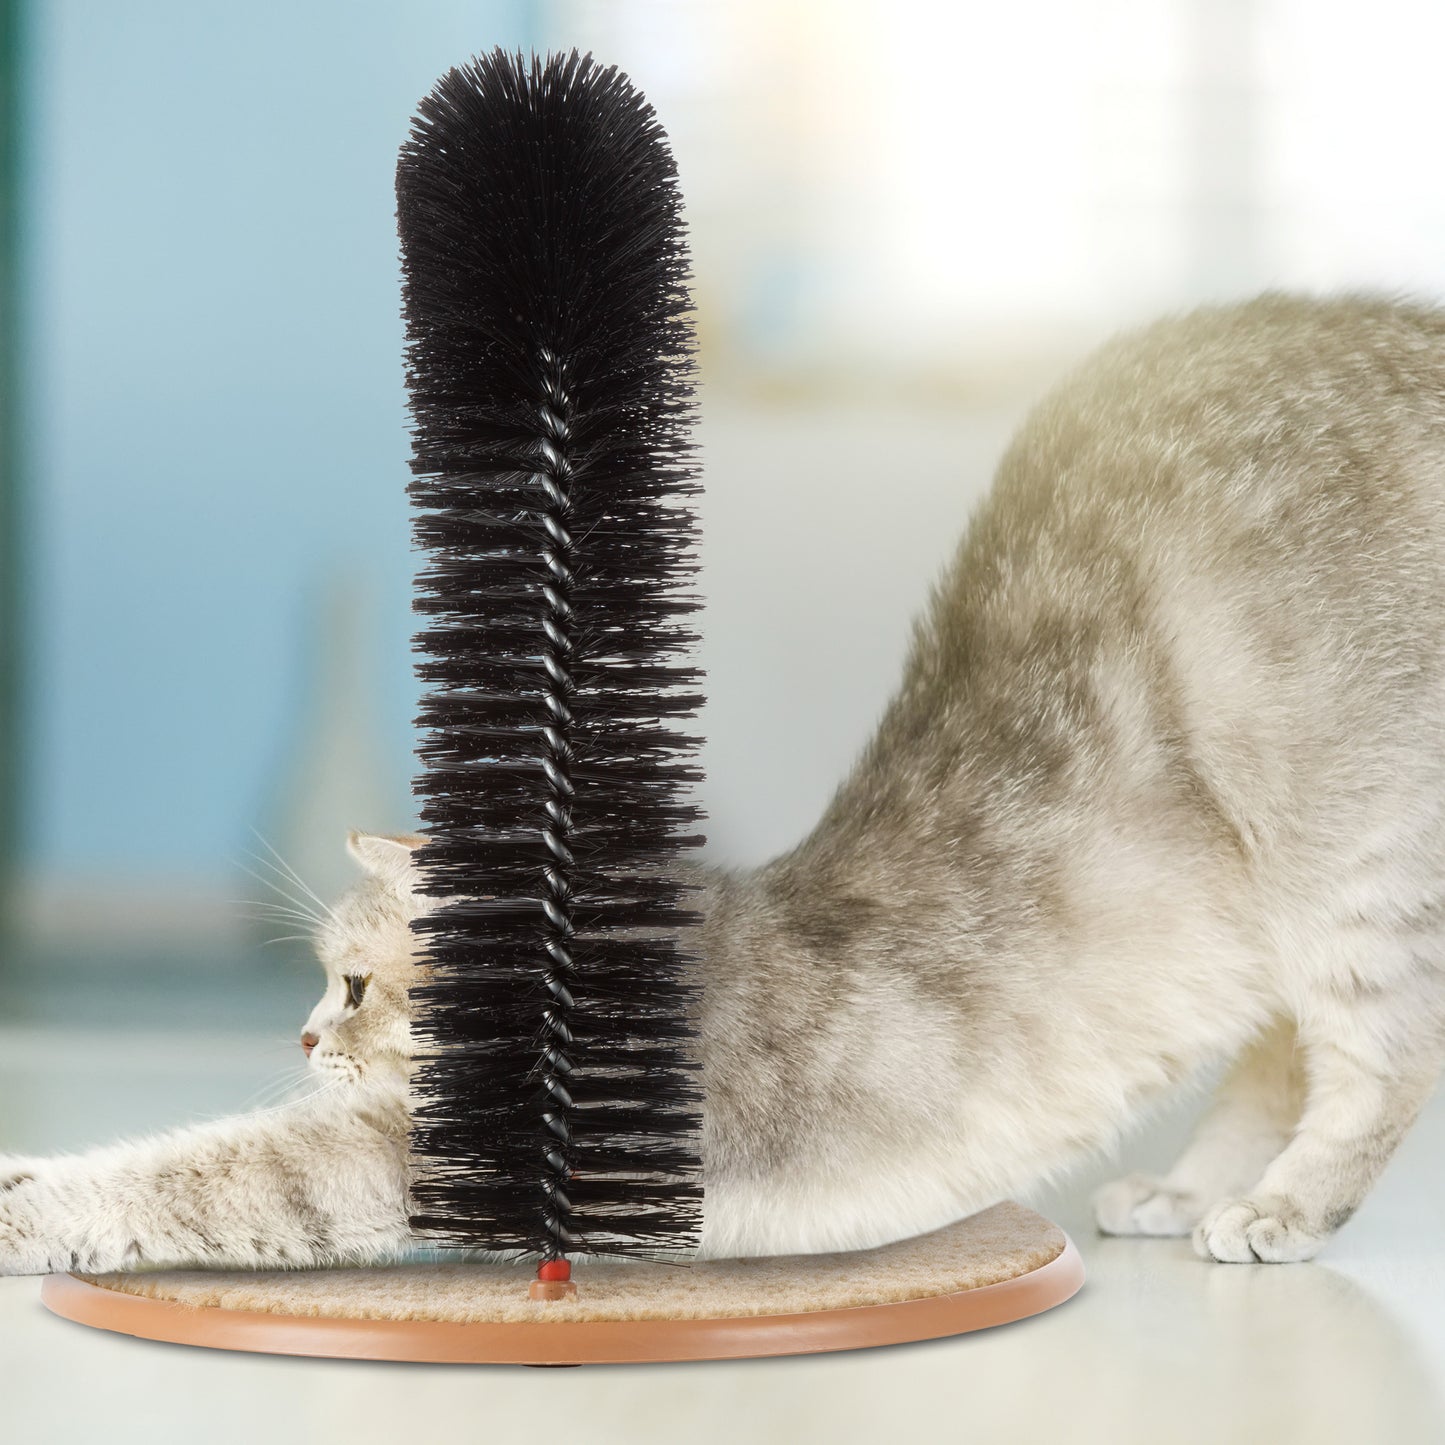 Cat Self-Groomer and Ring Brush